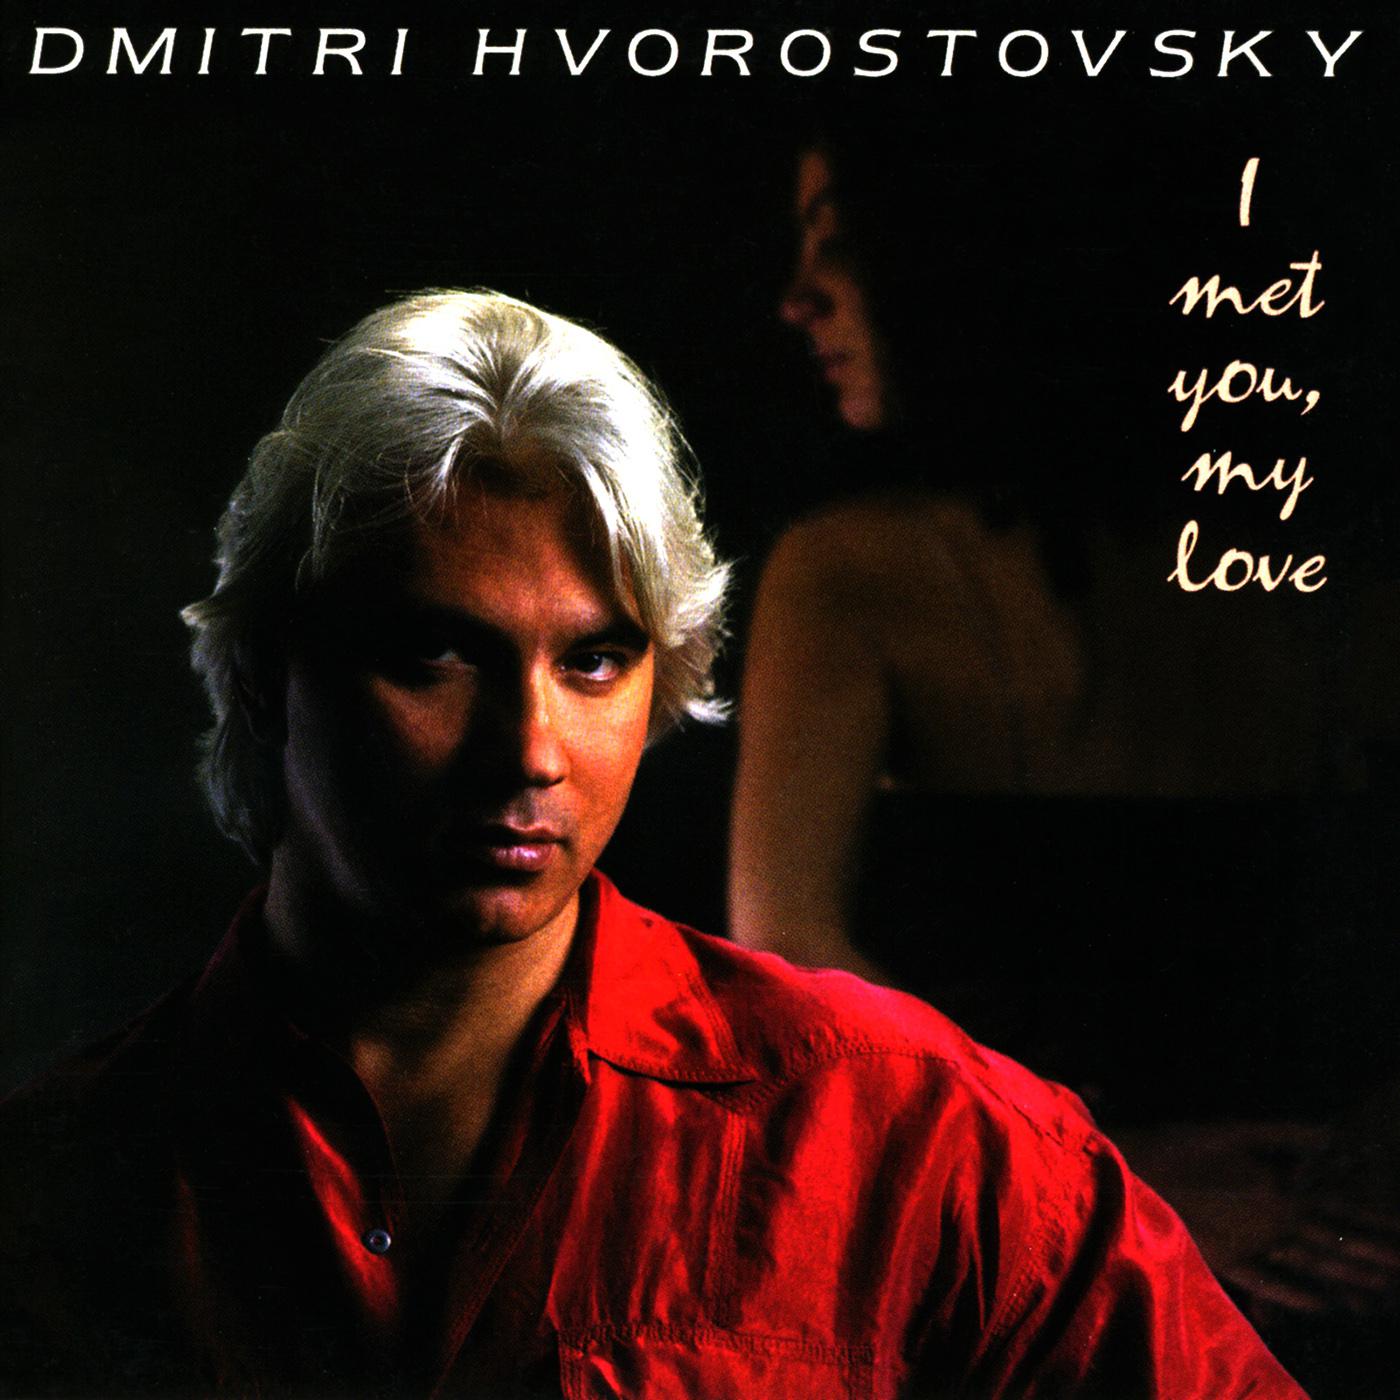 Dmitri Hvorostovsky - Net, ne tebia tak pilko ya liubliu (No, It's Not You I Love So Fervently) (arr. E. Stetsyuk):or baritone and orchestra)